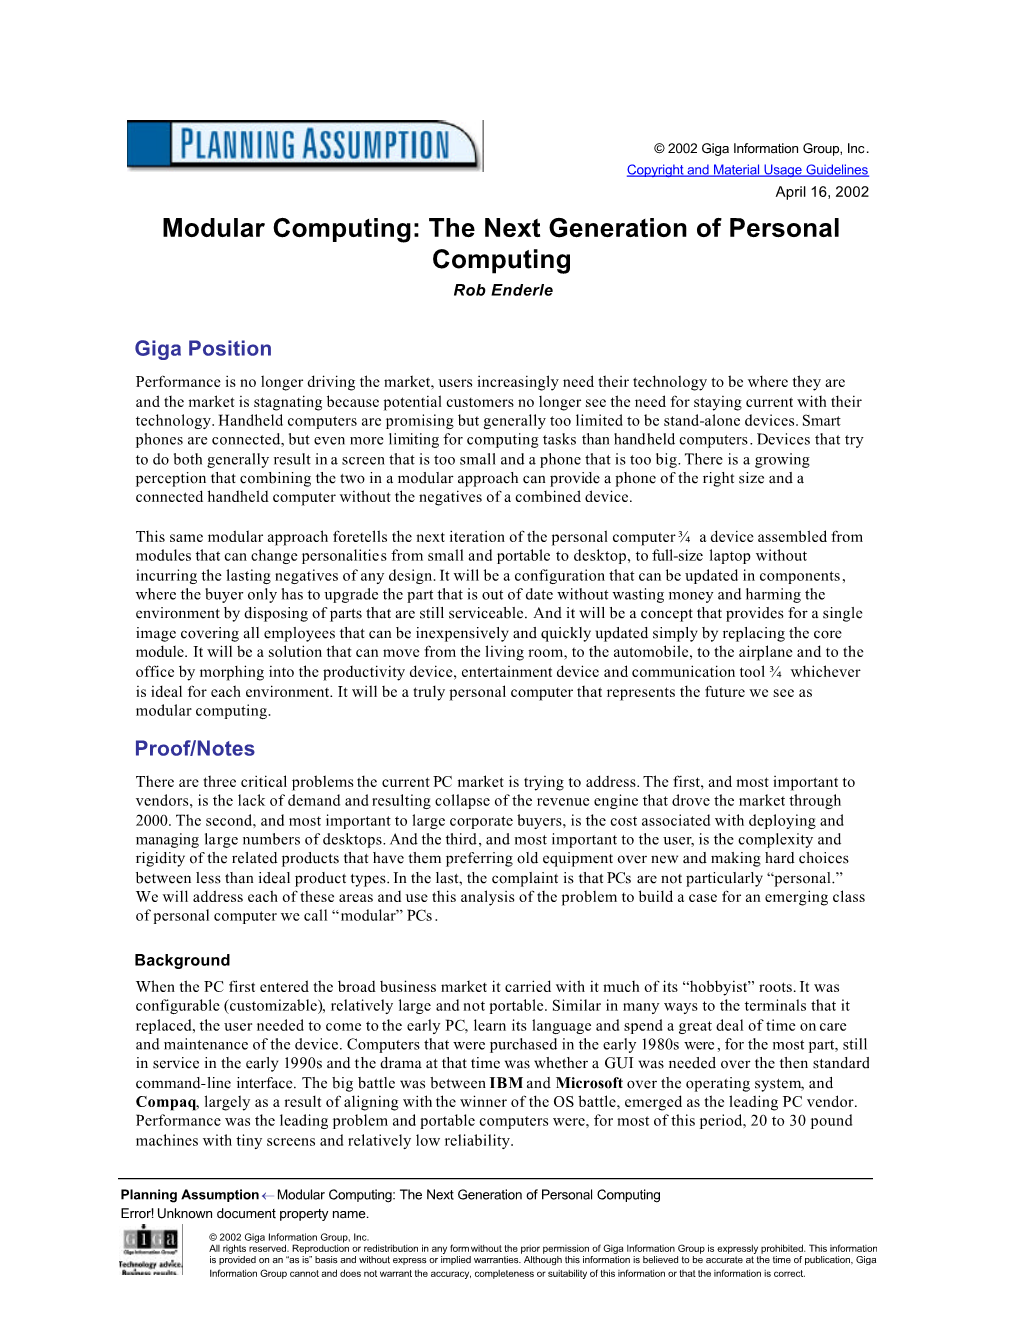 Modular Computing: the Next Generation of Personal Computing Rob Enderle